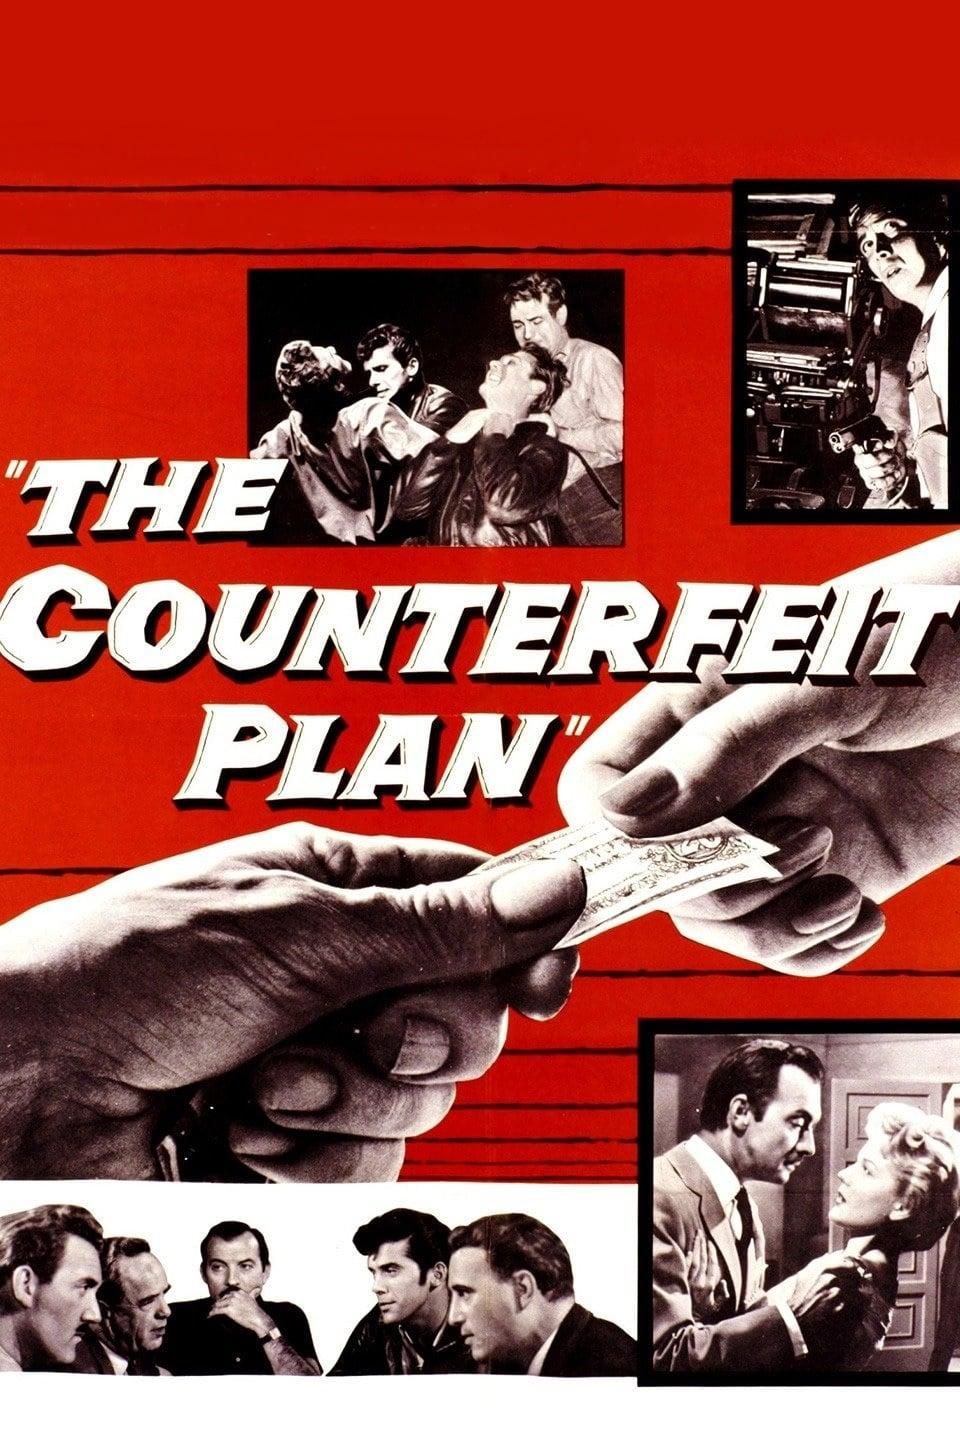 The Counterfeit Plan poster